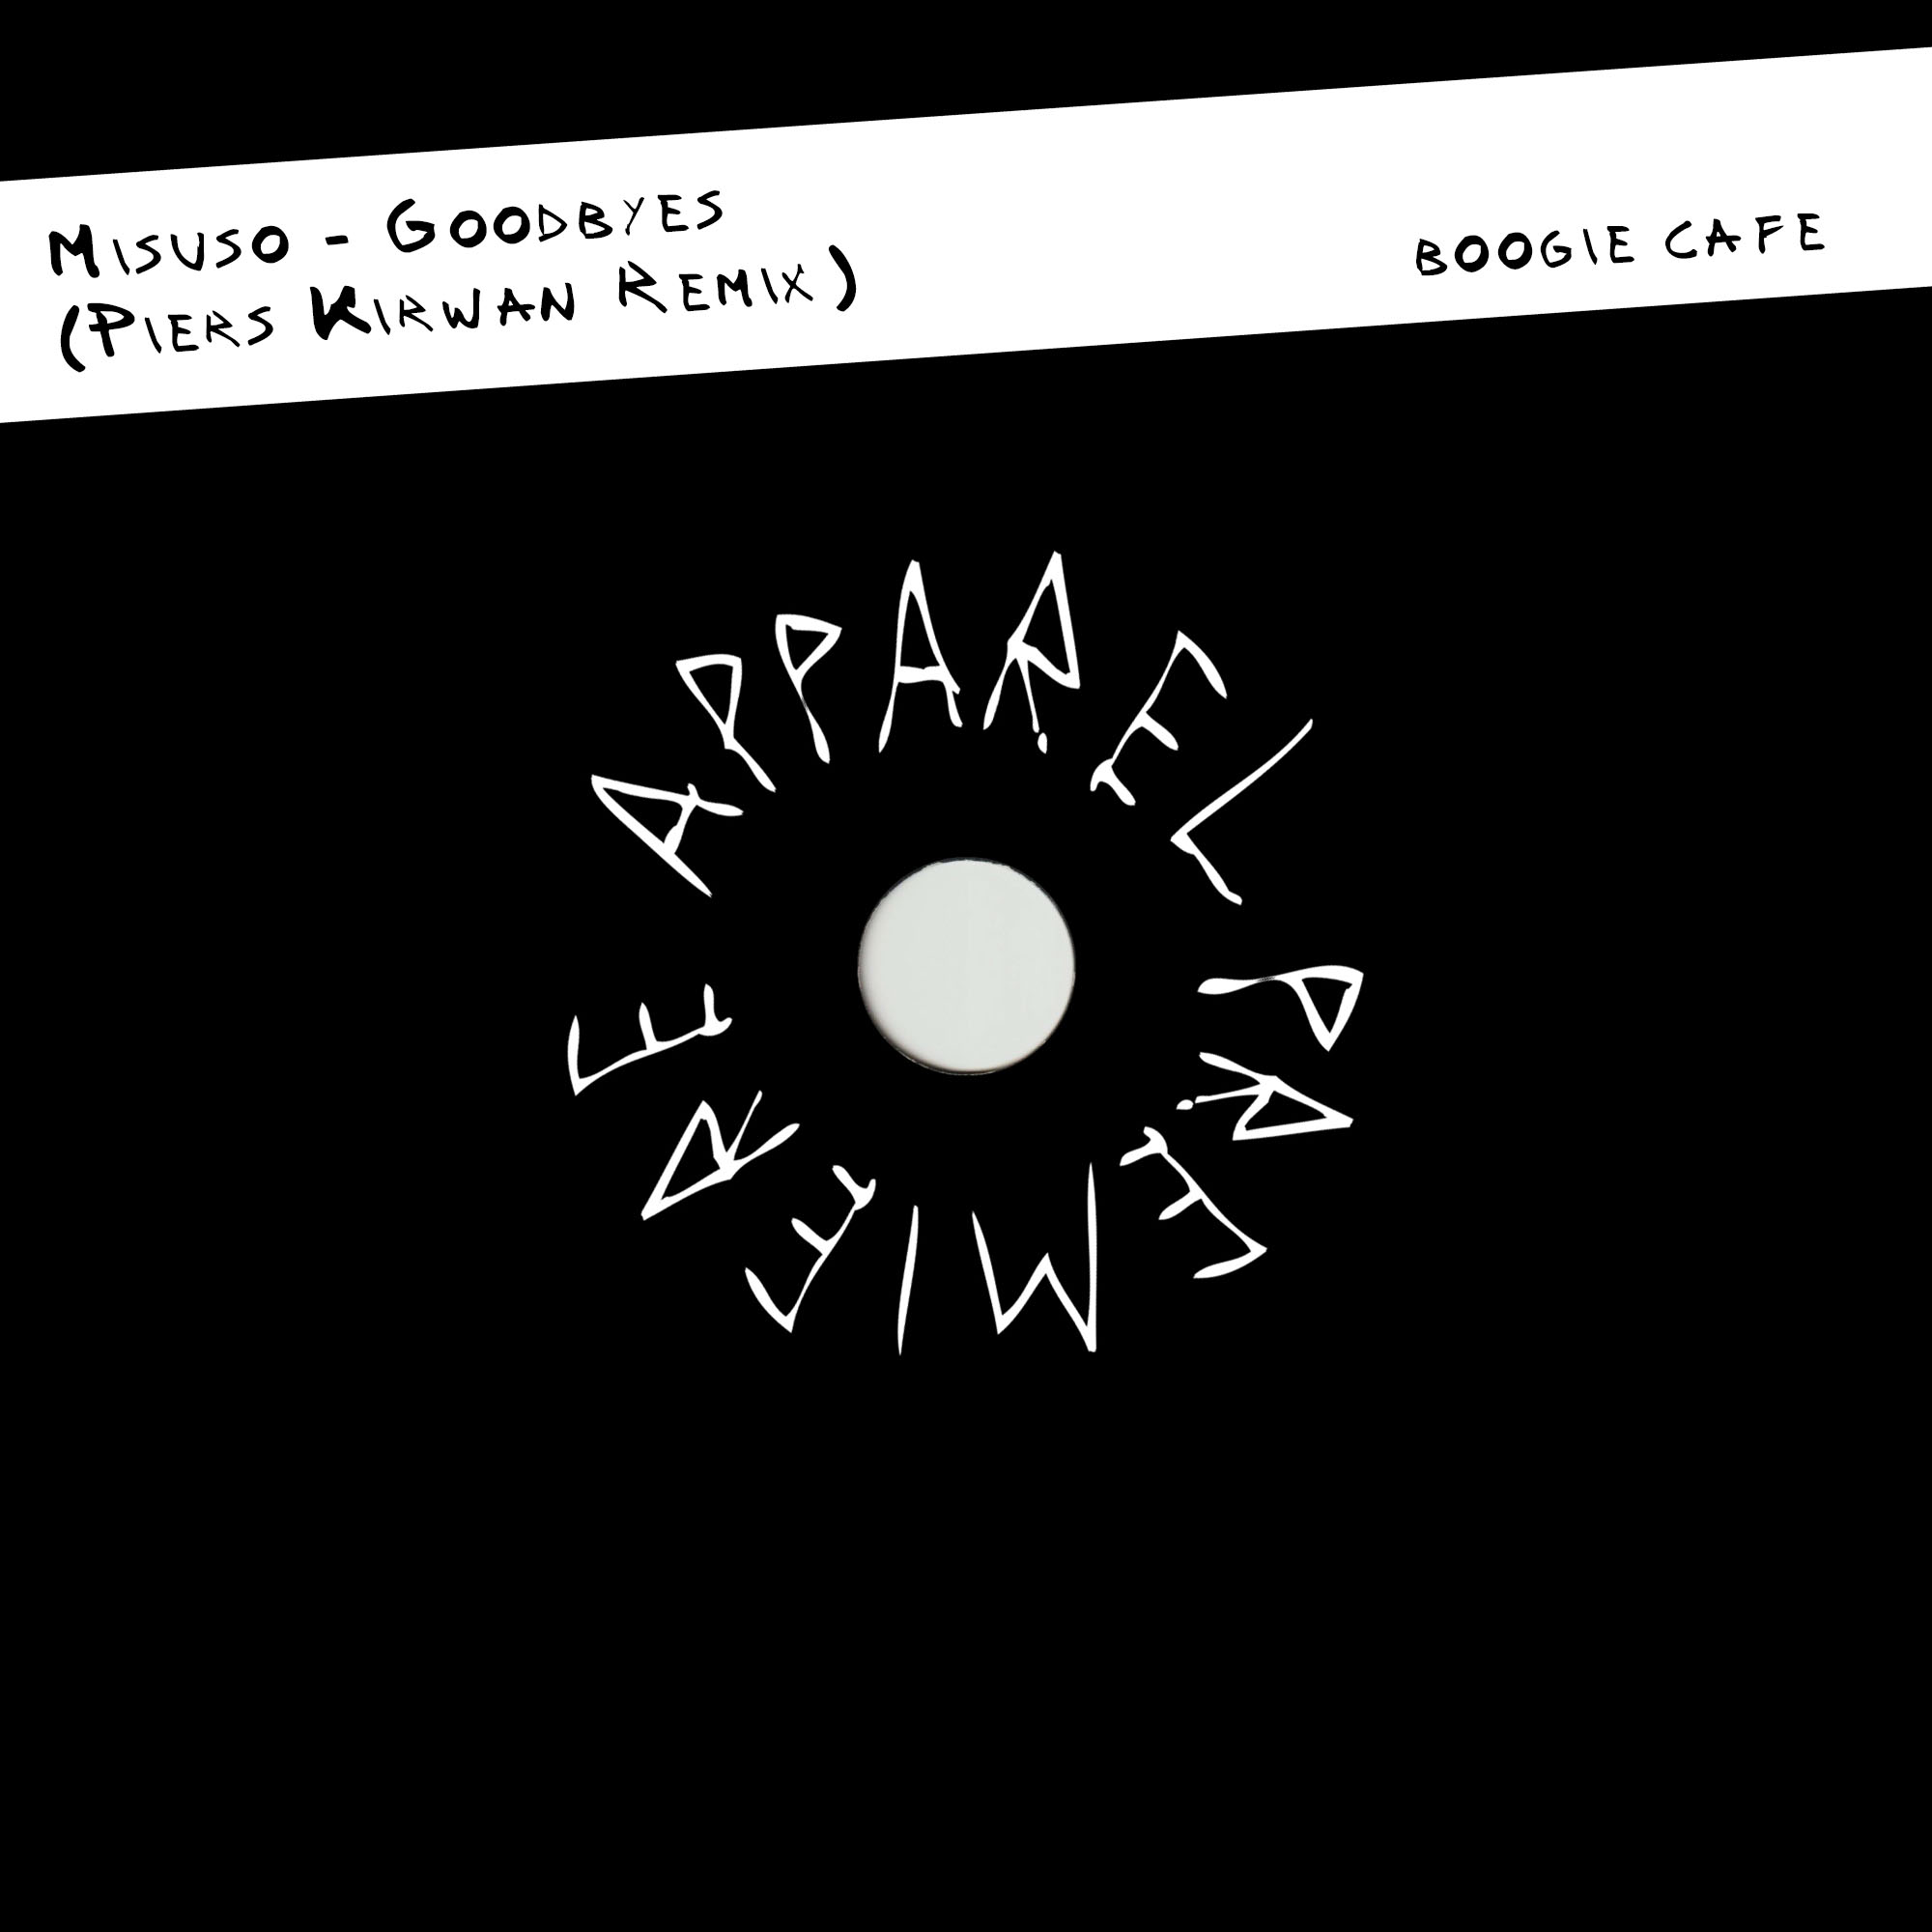 APPAREL PREMIERE Misuso – Goodbyes (Piers Kirwan Remix) [Boogie Cafe]